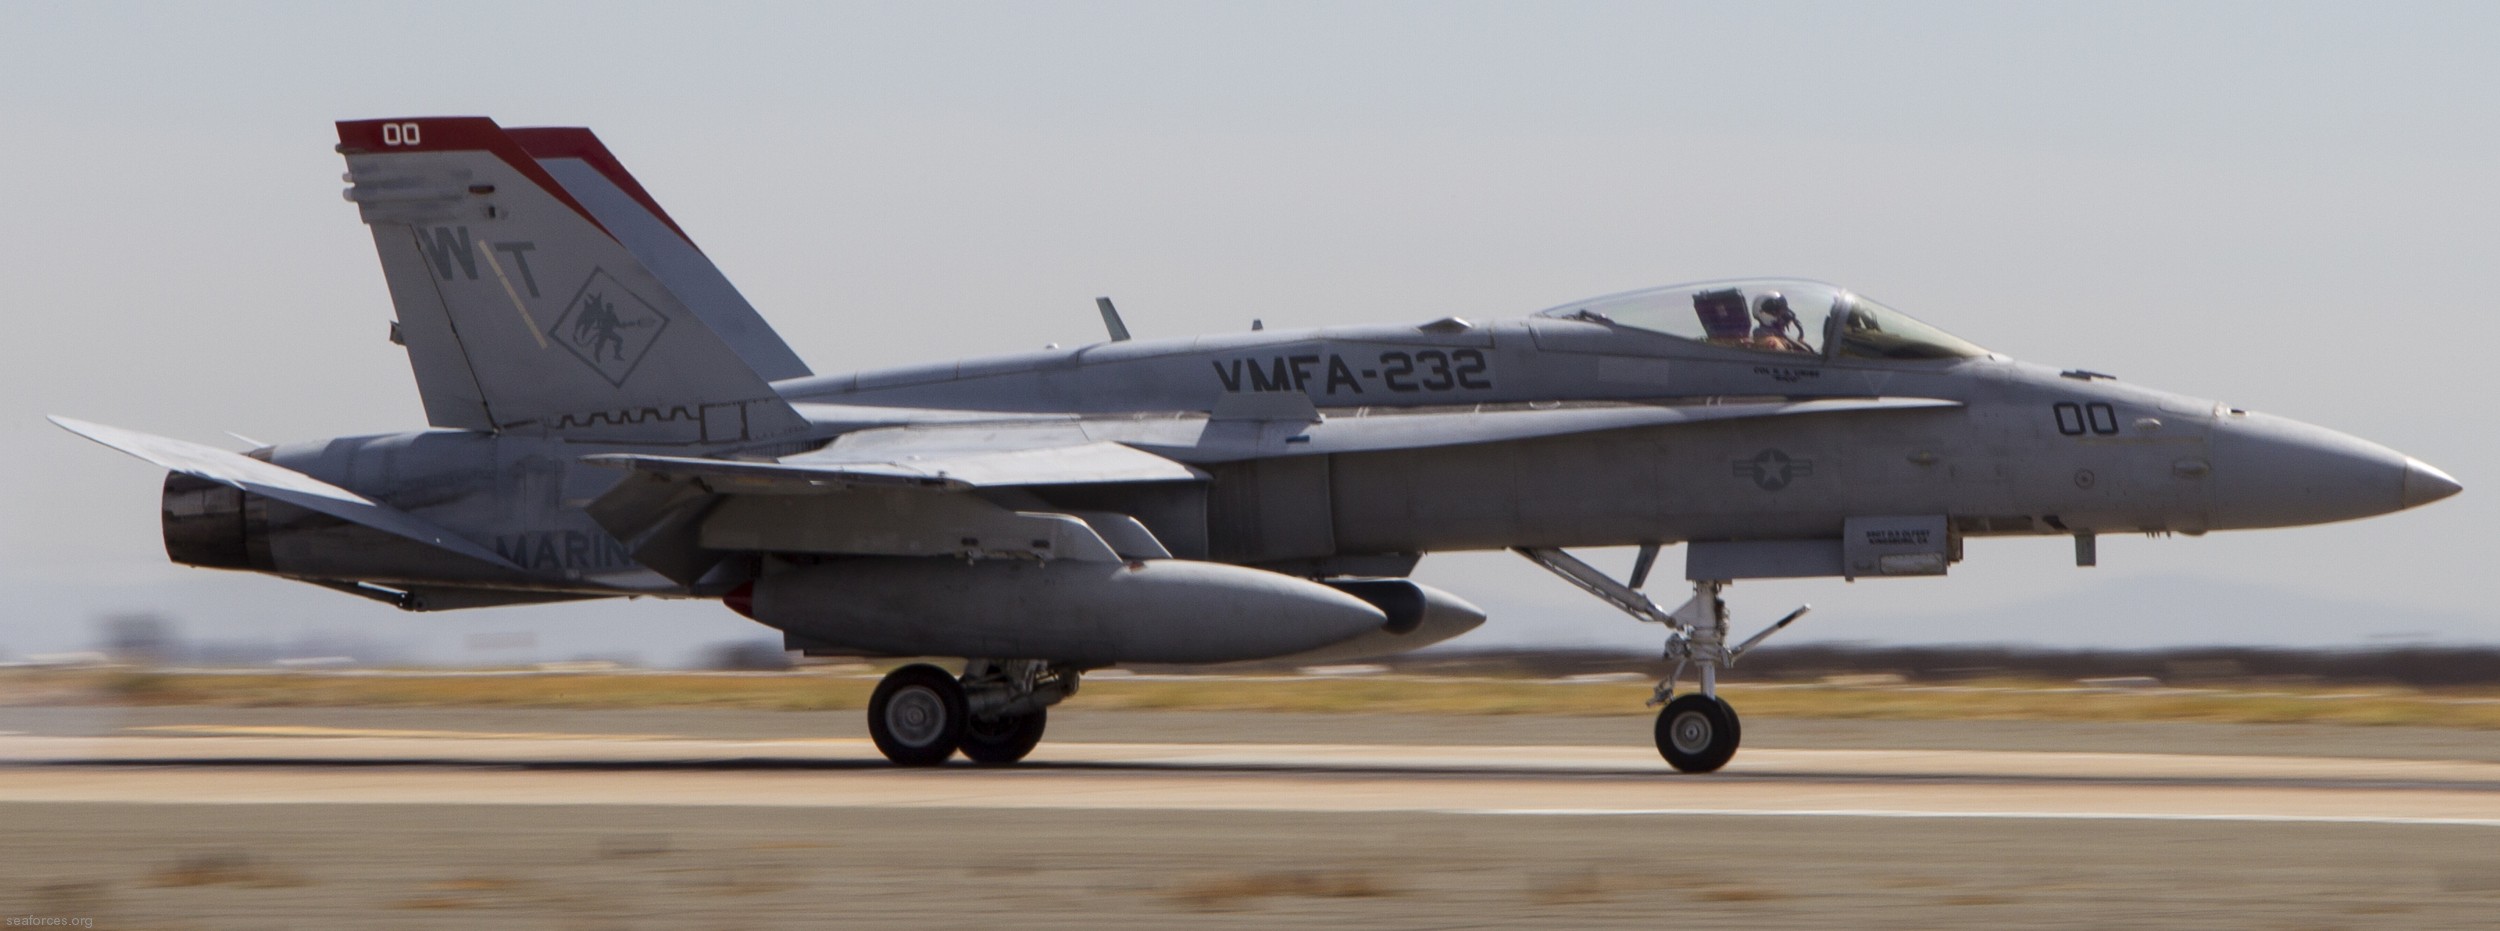 vmfa-232 red devils marine fighter attack squadron usmc f/a-18c hornet 137 mcas miramar california